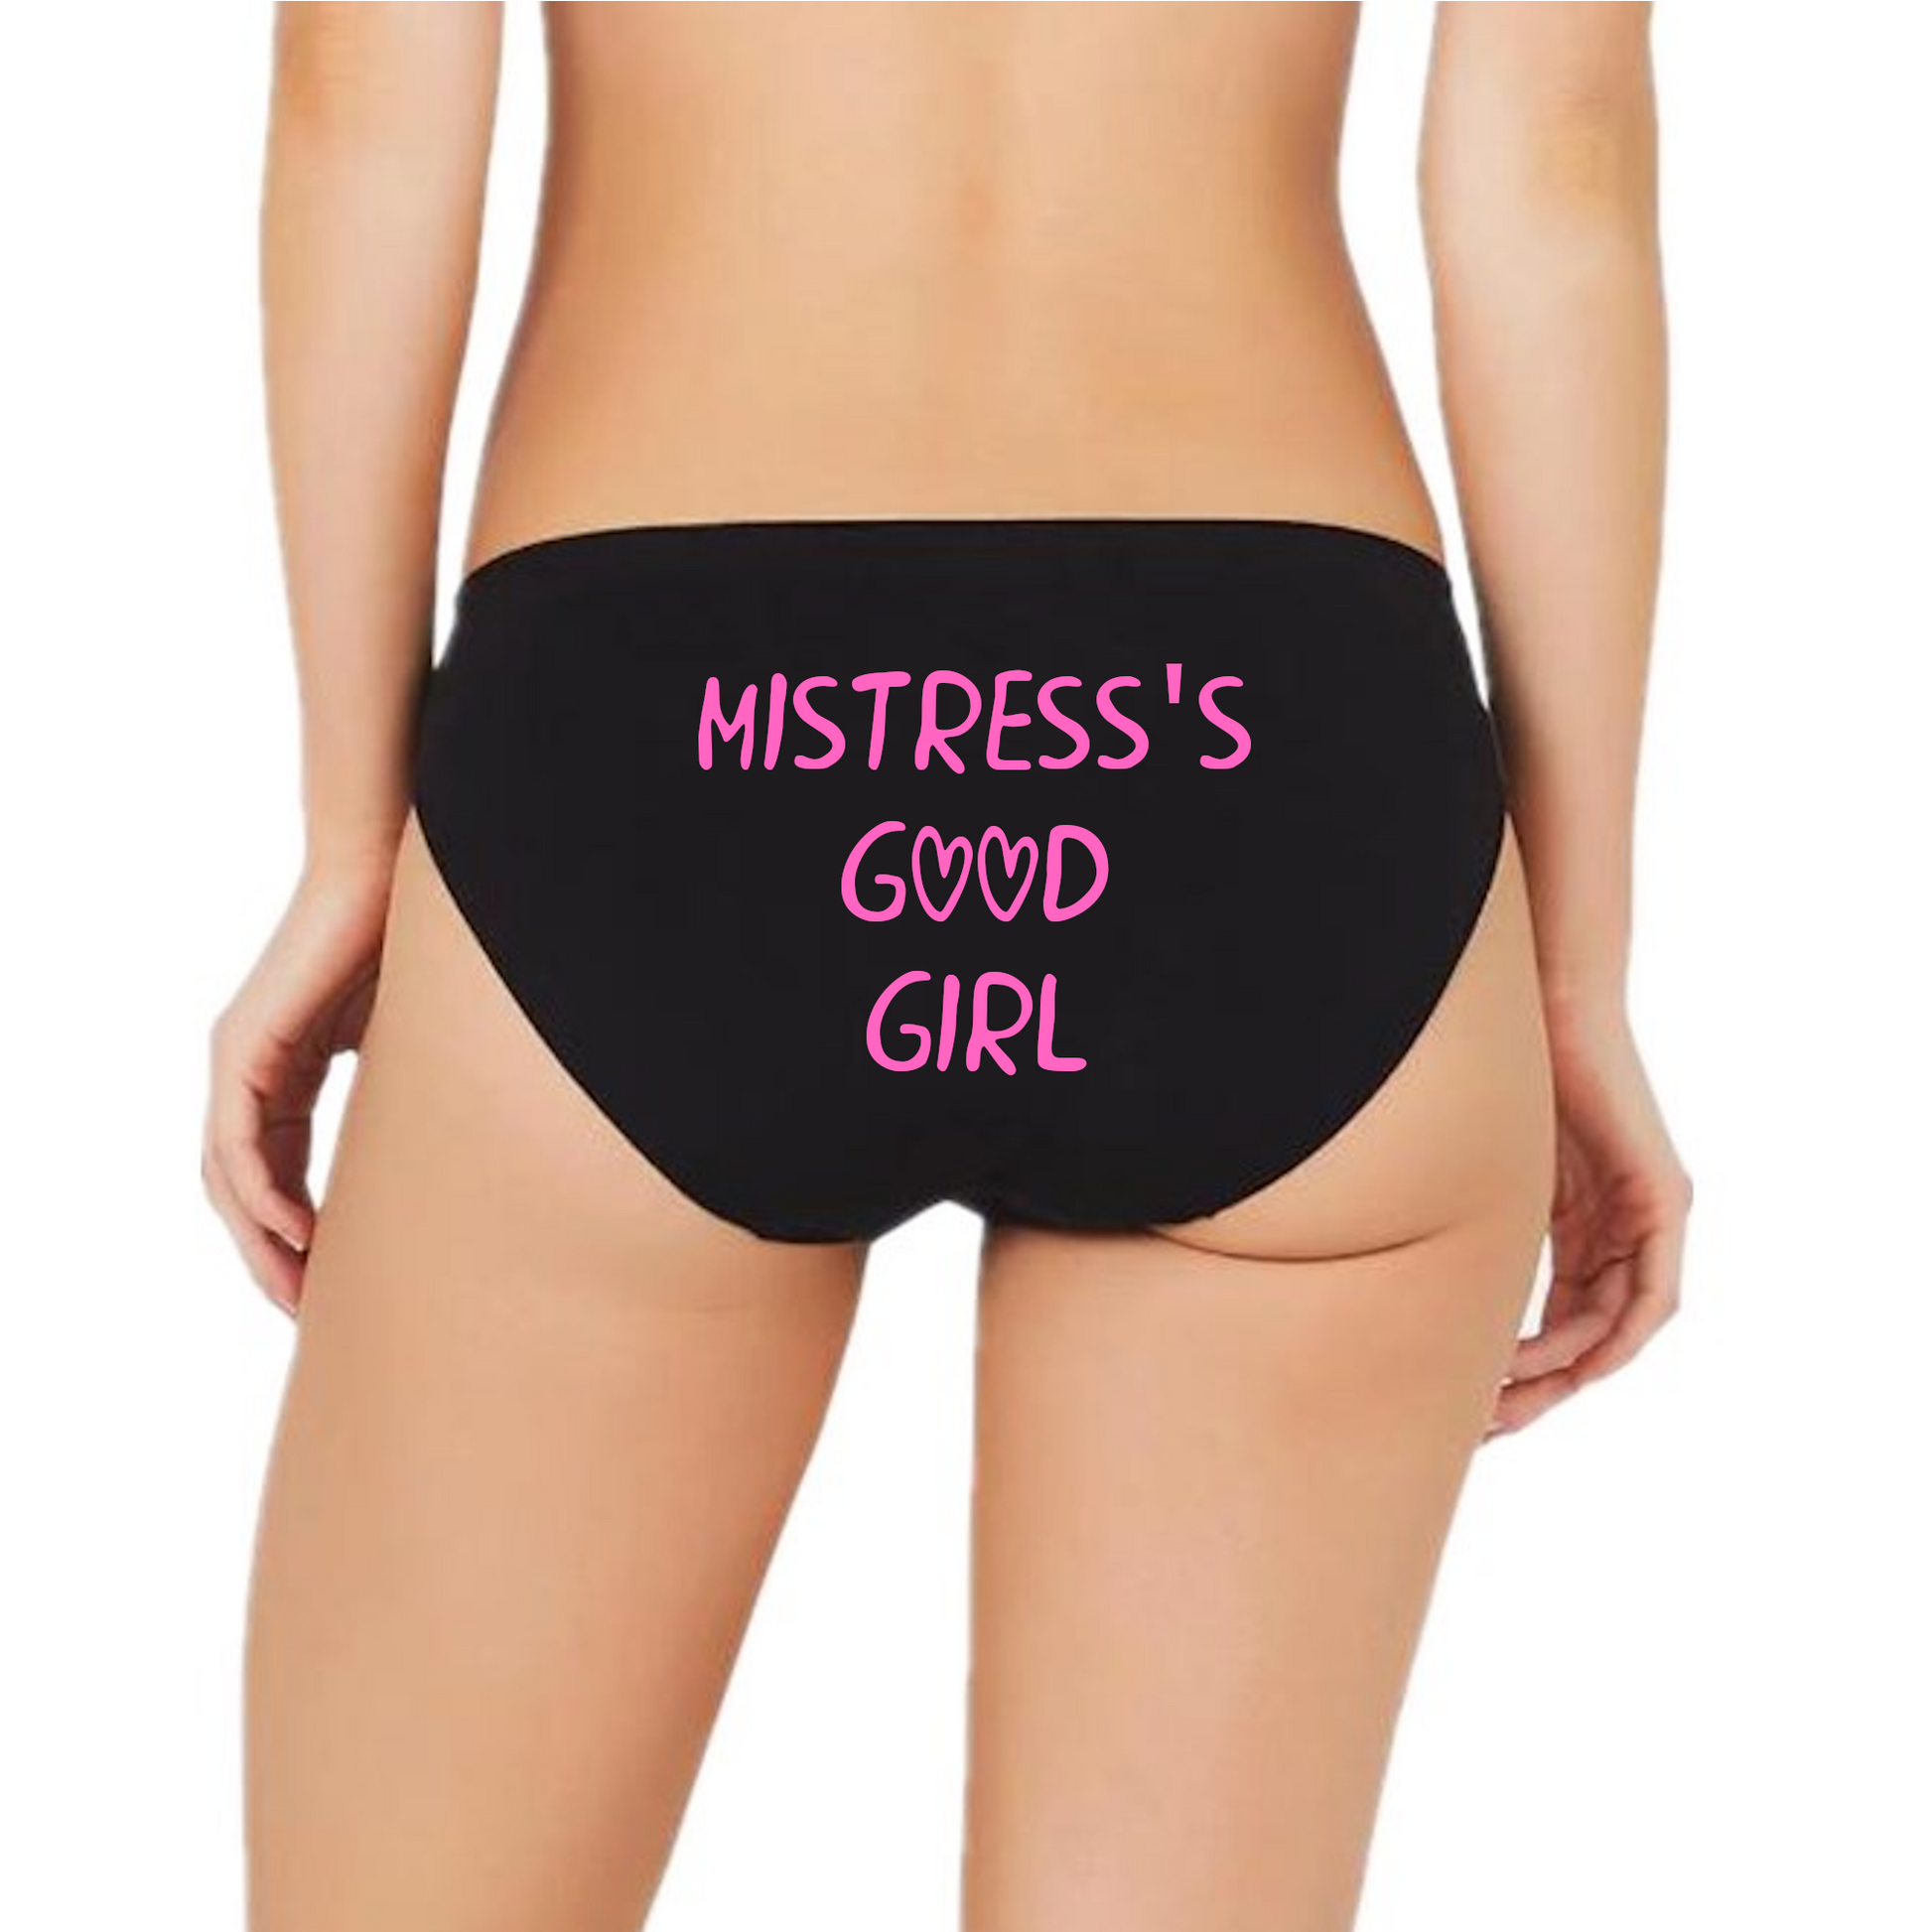 Mistress's Good Girl mdlg Panties